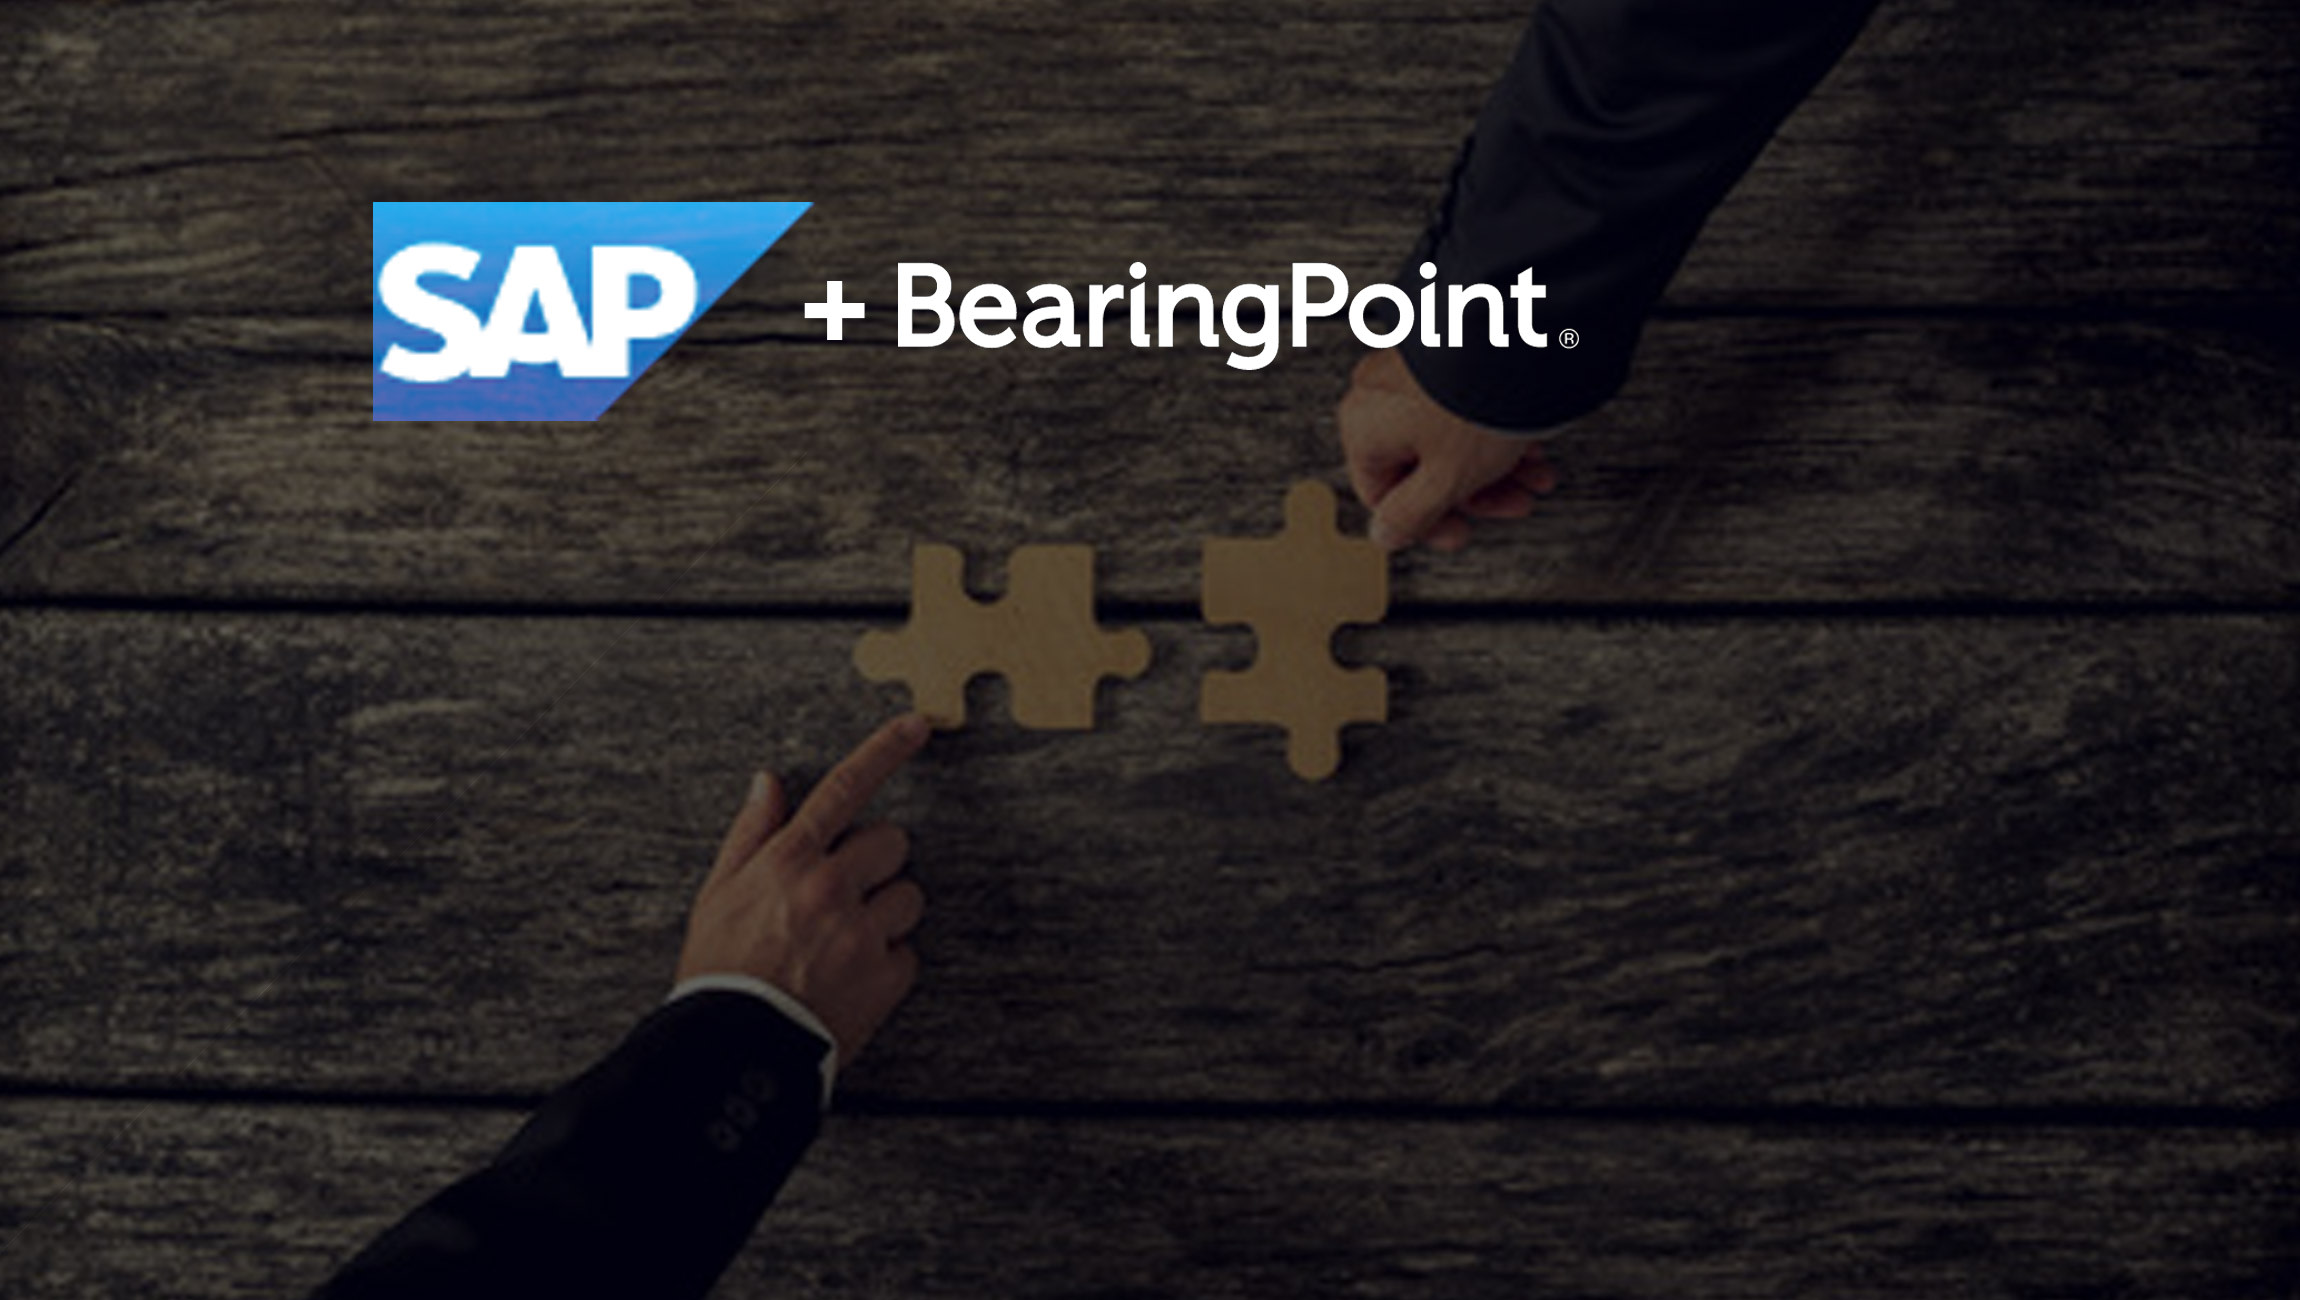 SAP and BearingPoint partner on zero-emissions technology